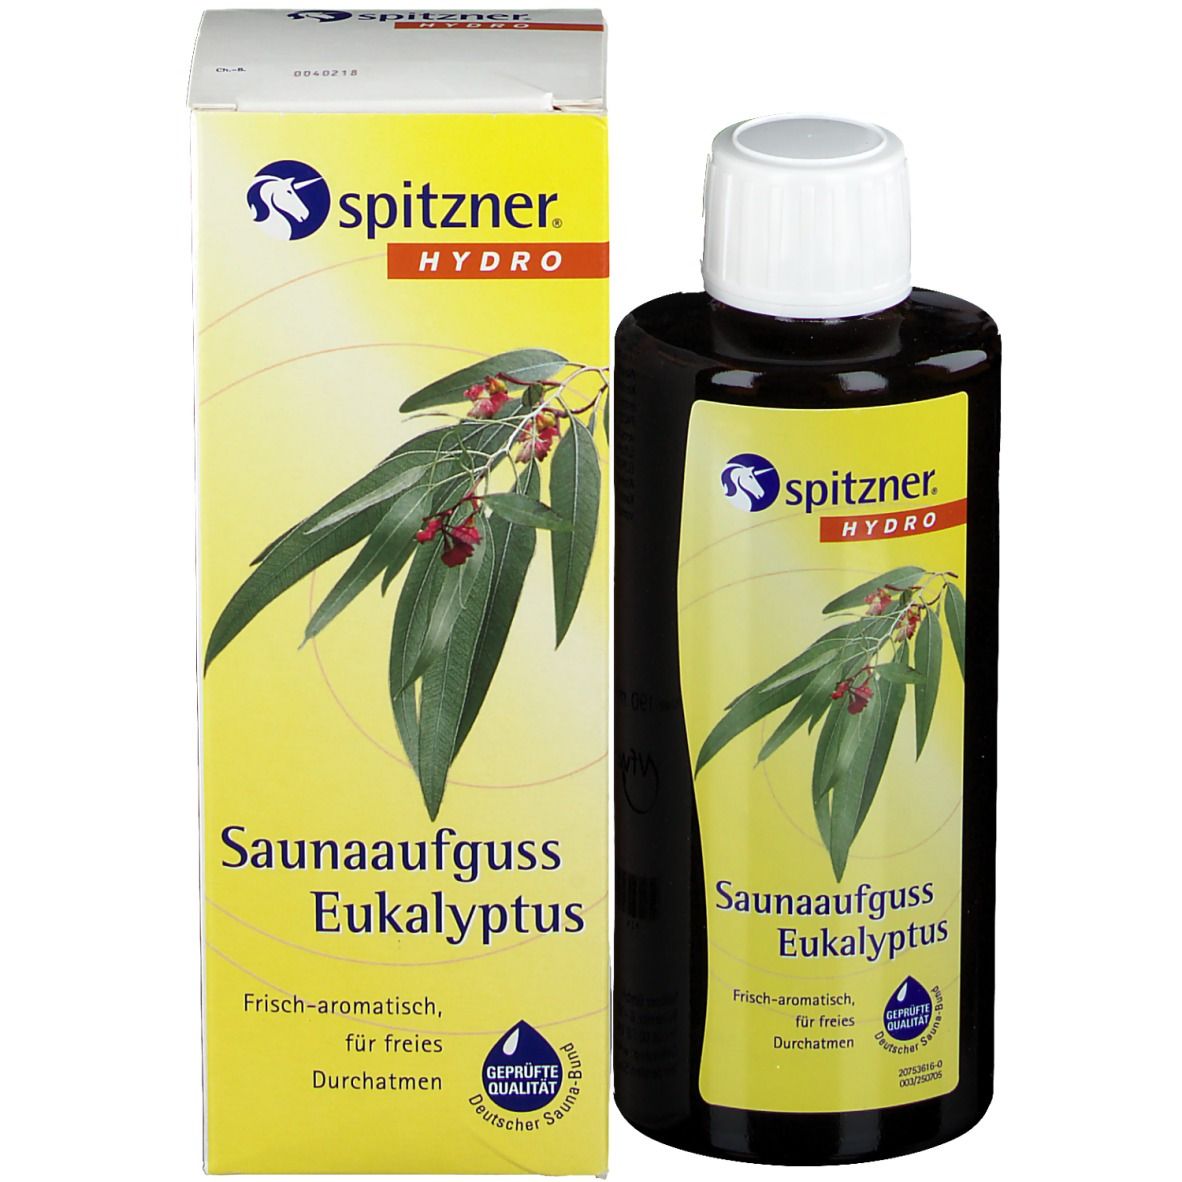 Spitzner® Hydro Saunaaufguss Eukalyptus